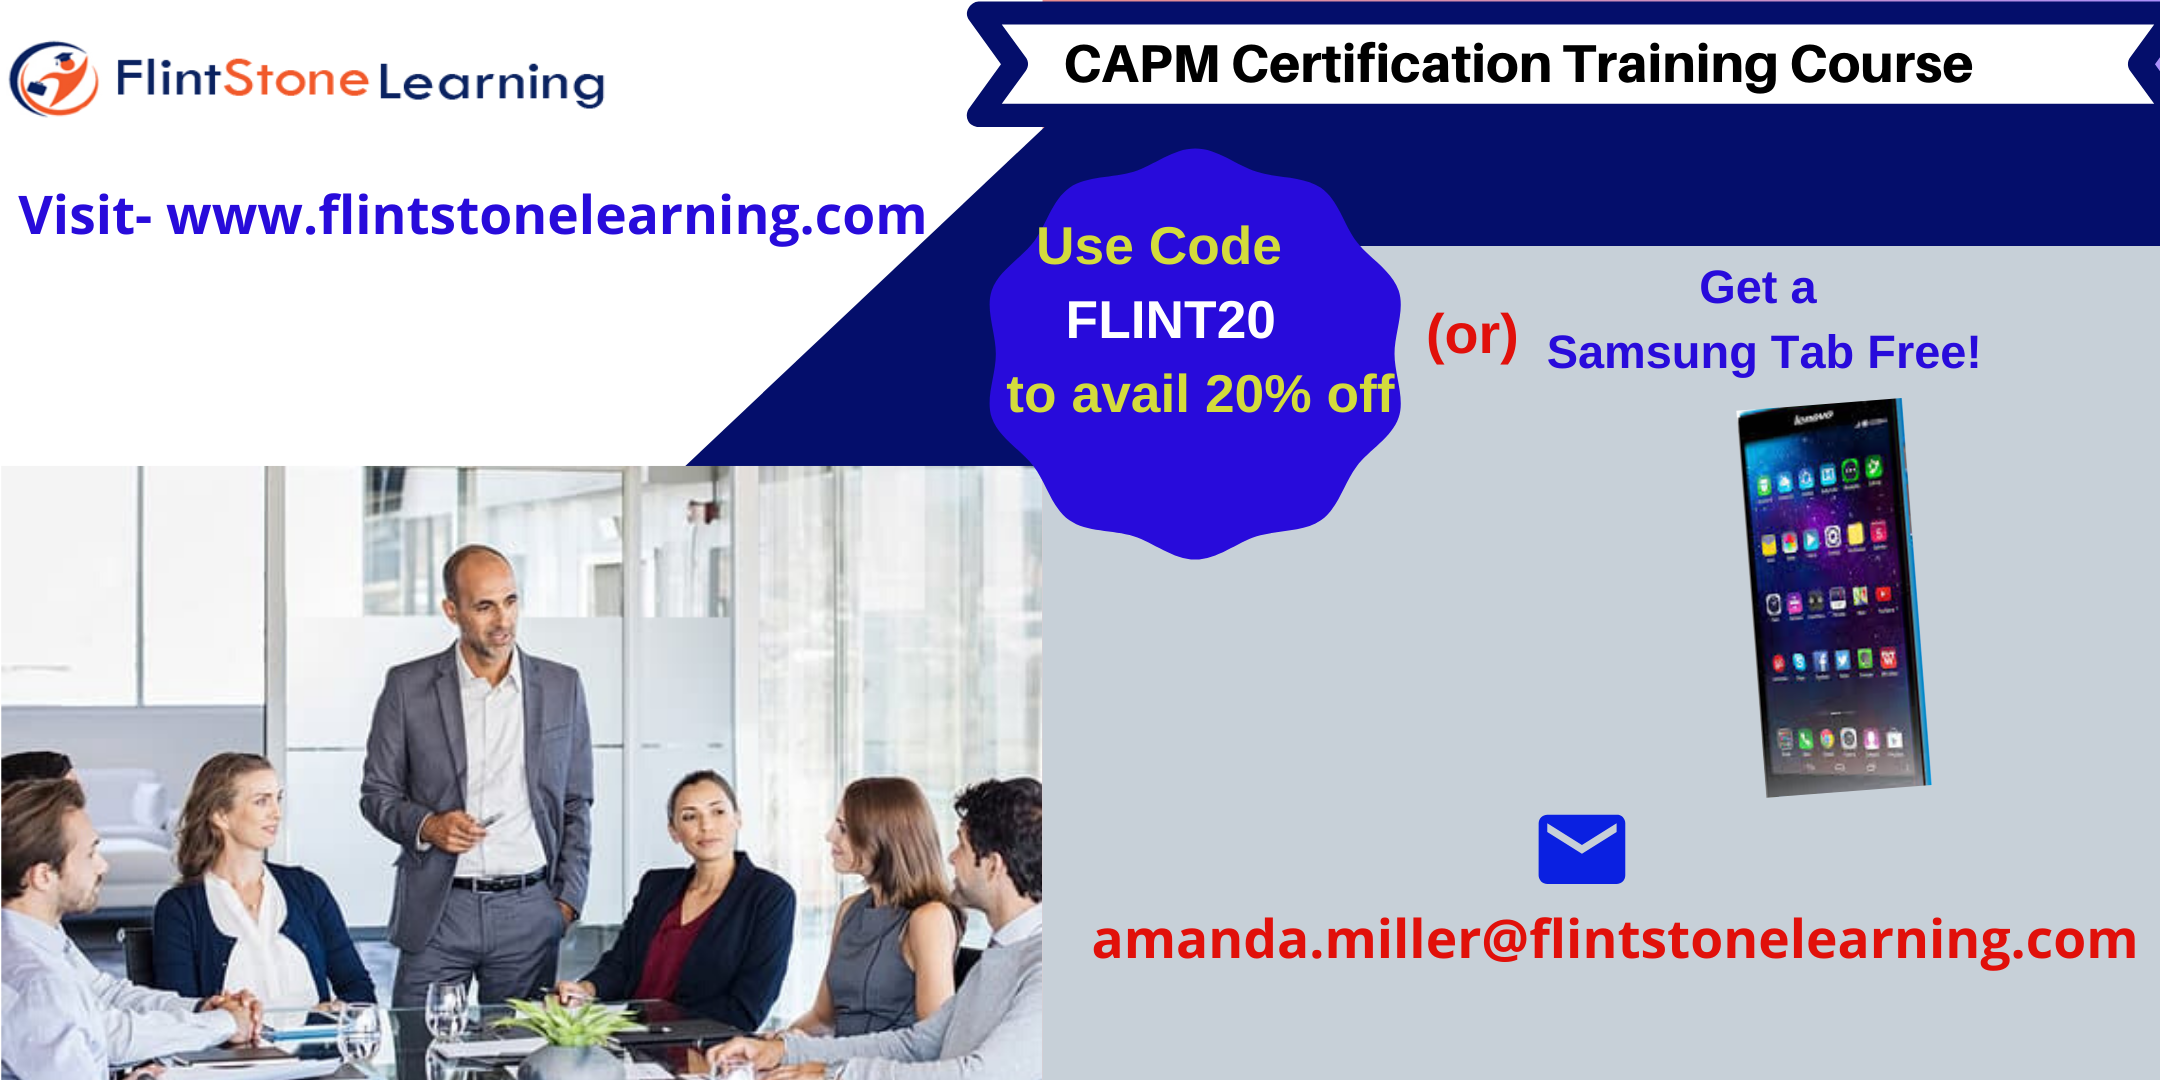 CAPM Certification Training Course in Aurora, IL